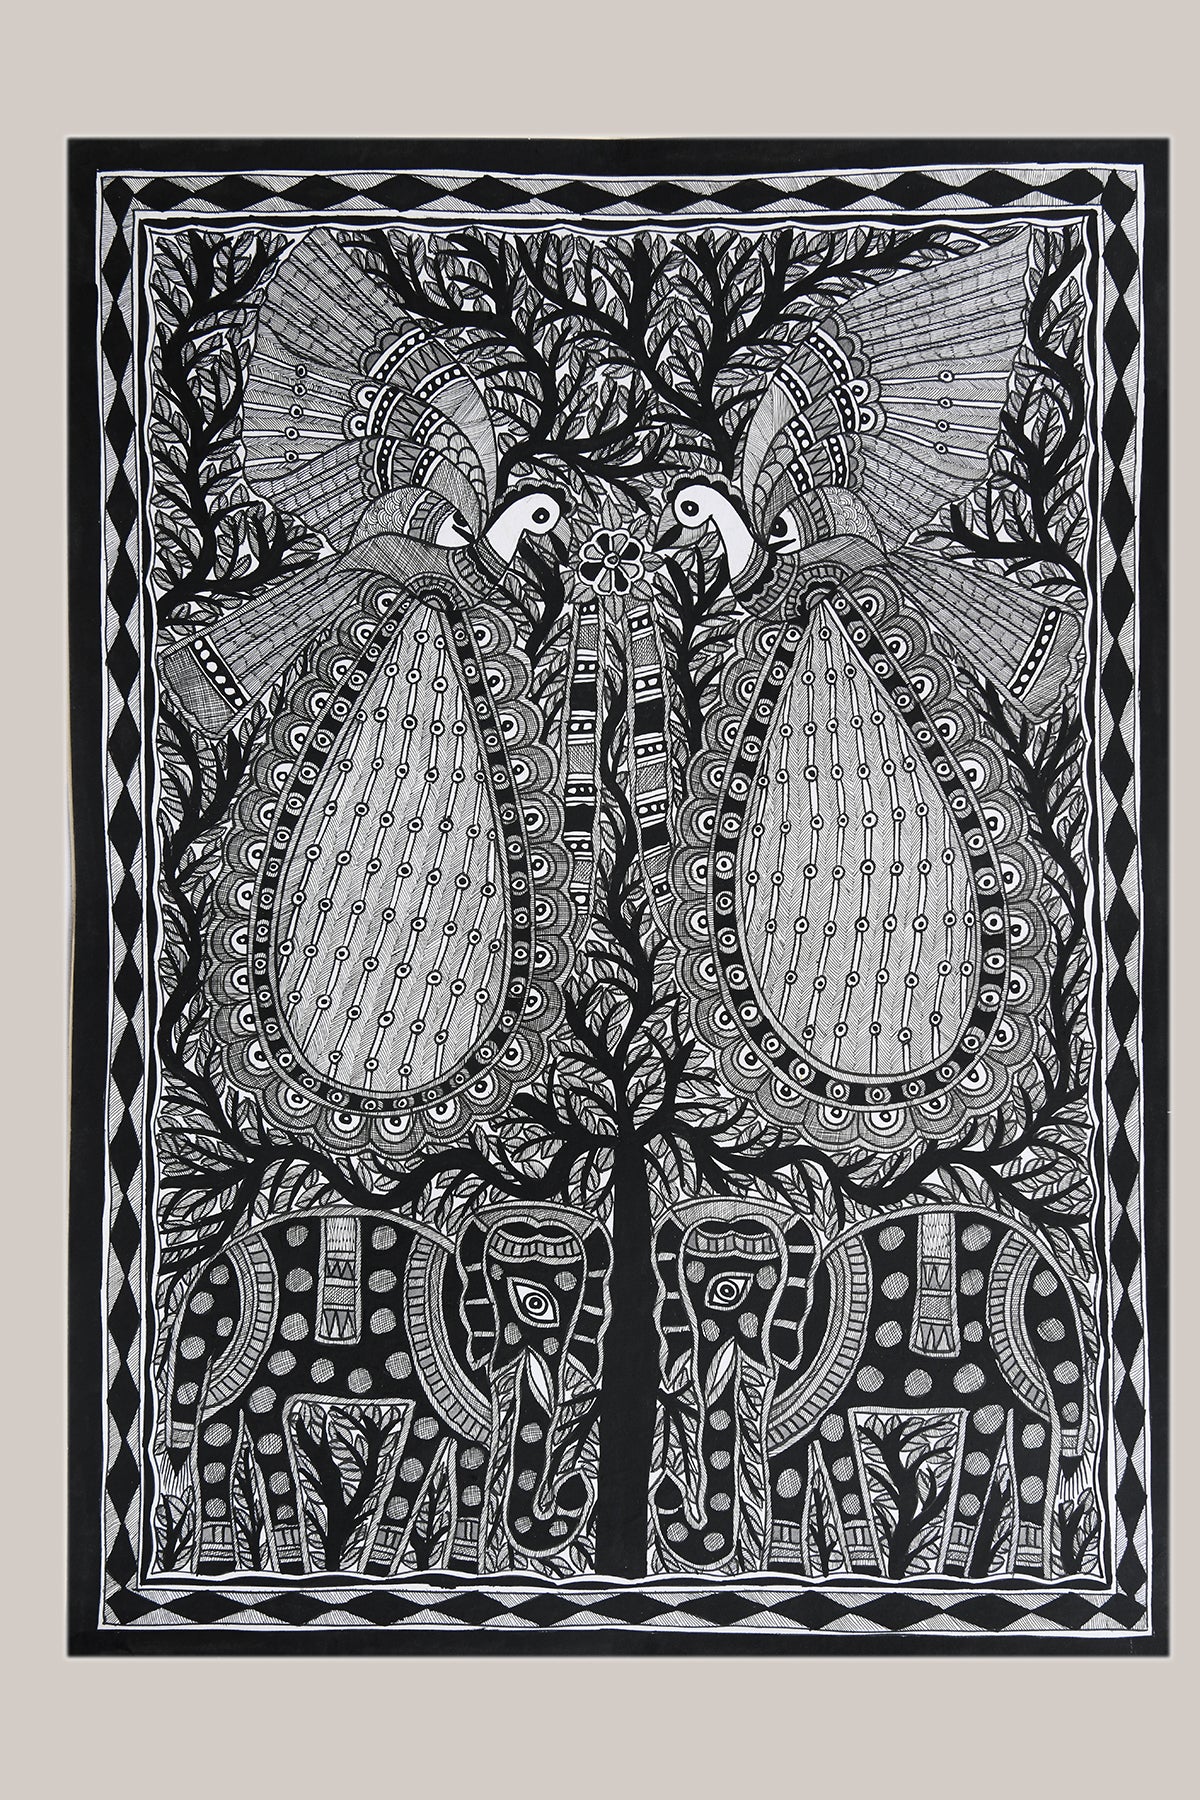 Godna painting "Peacocks & Elephants" by Ranjit Paswan